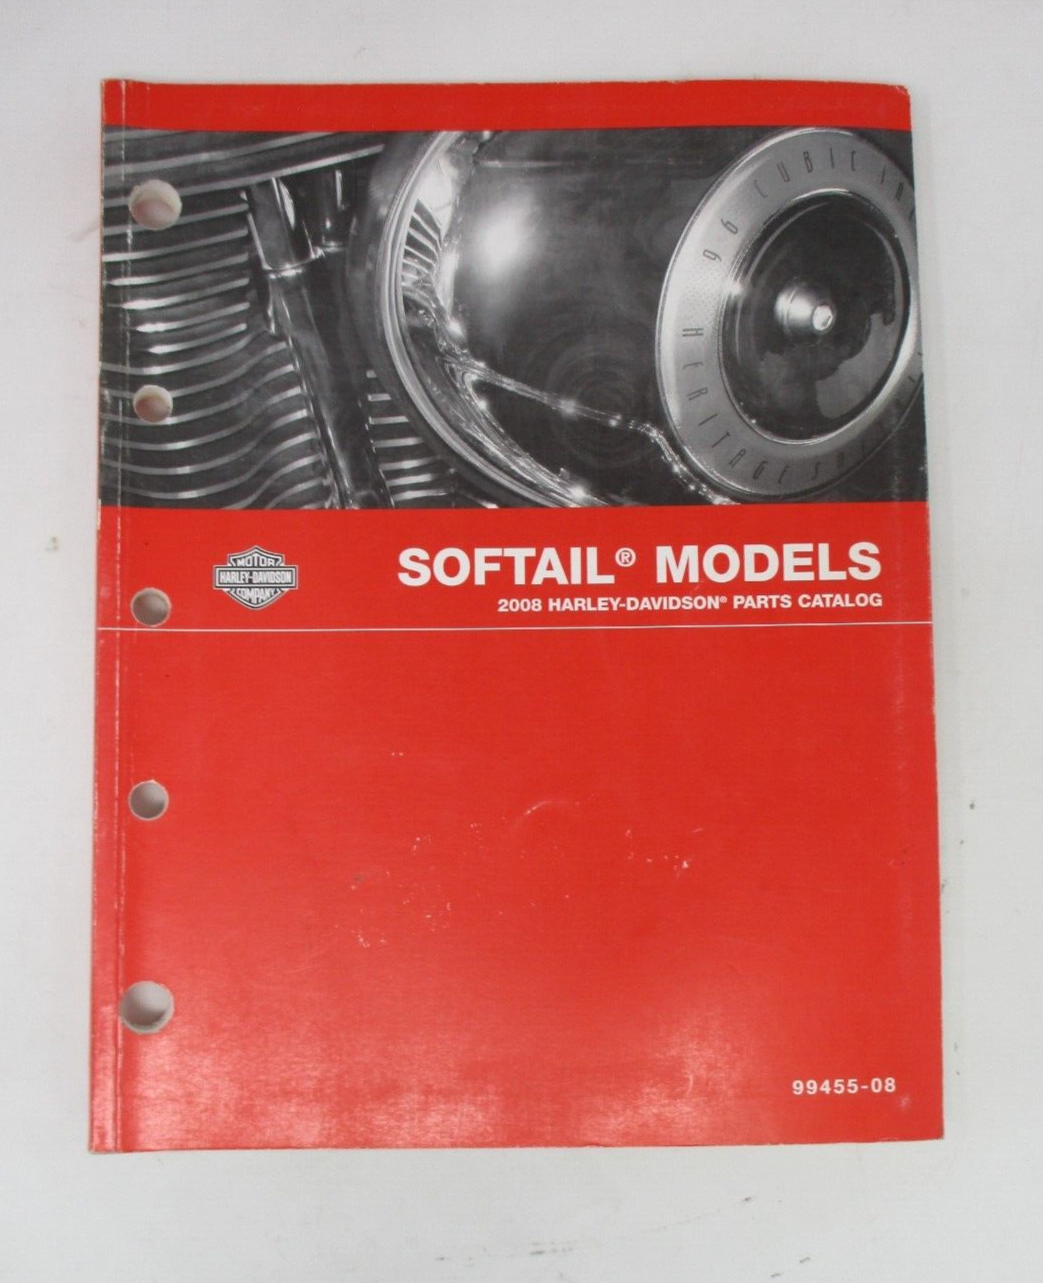 Softail Models 2008 Harley-Davidson Parts Catalog 99455-08